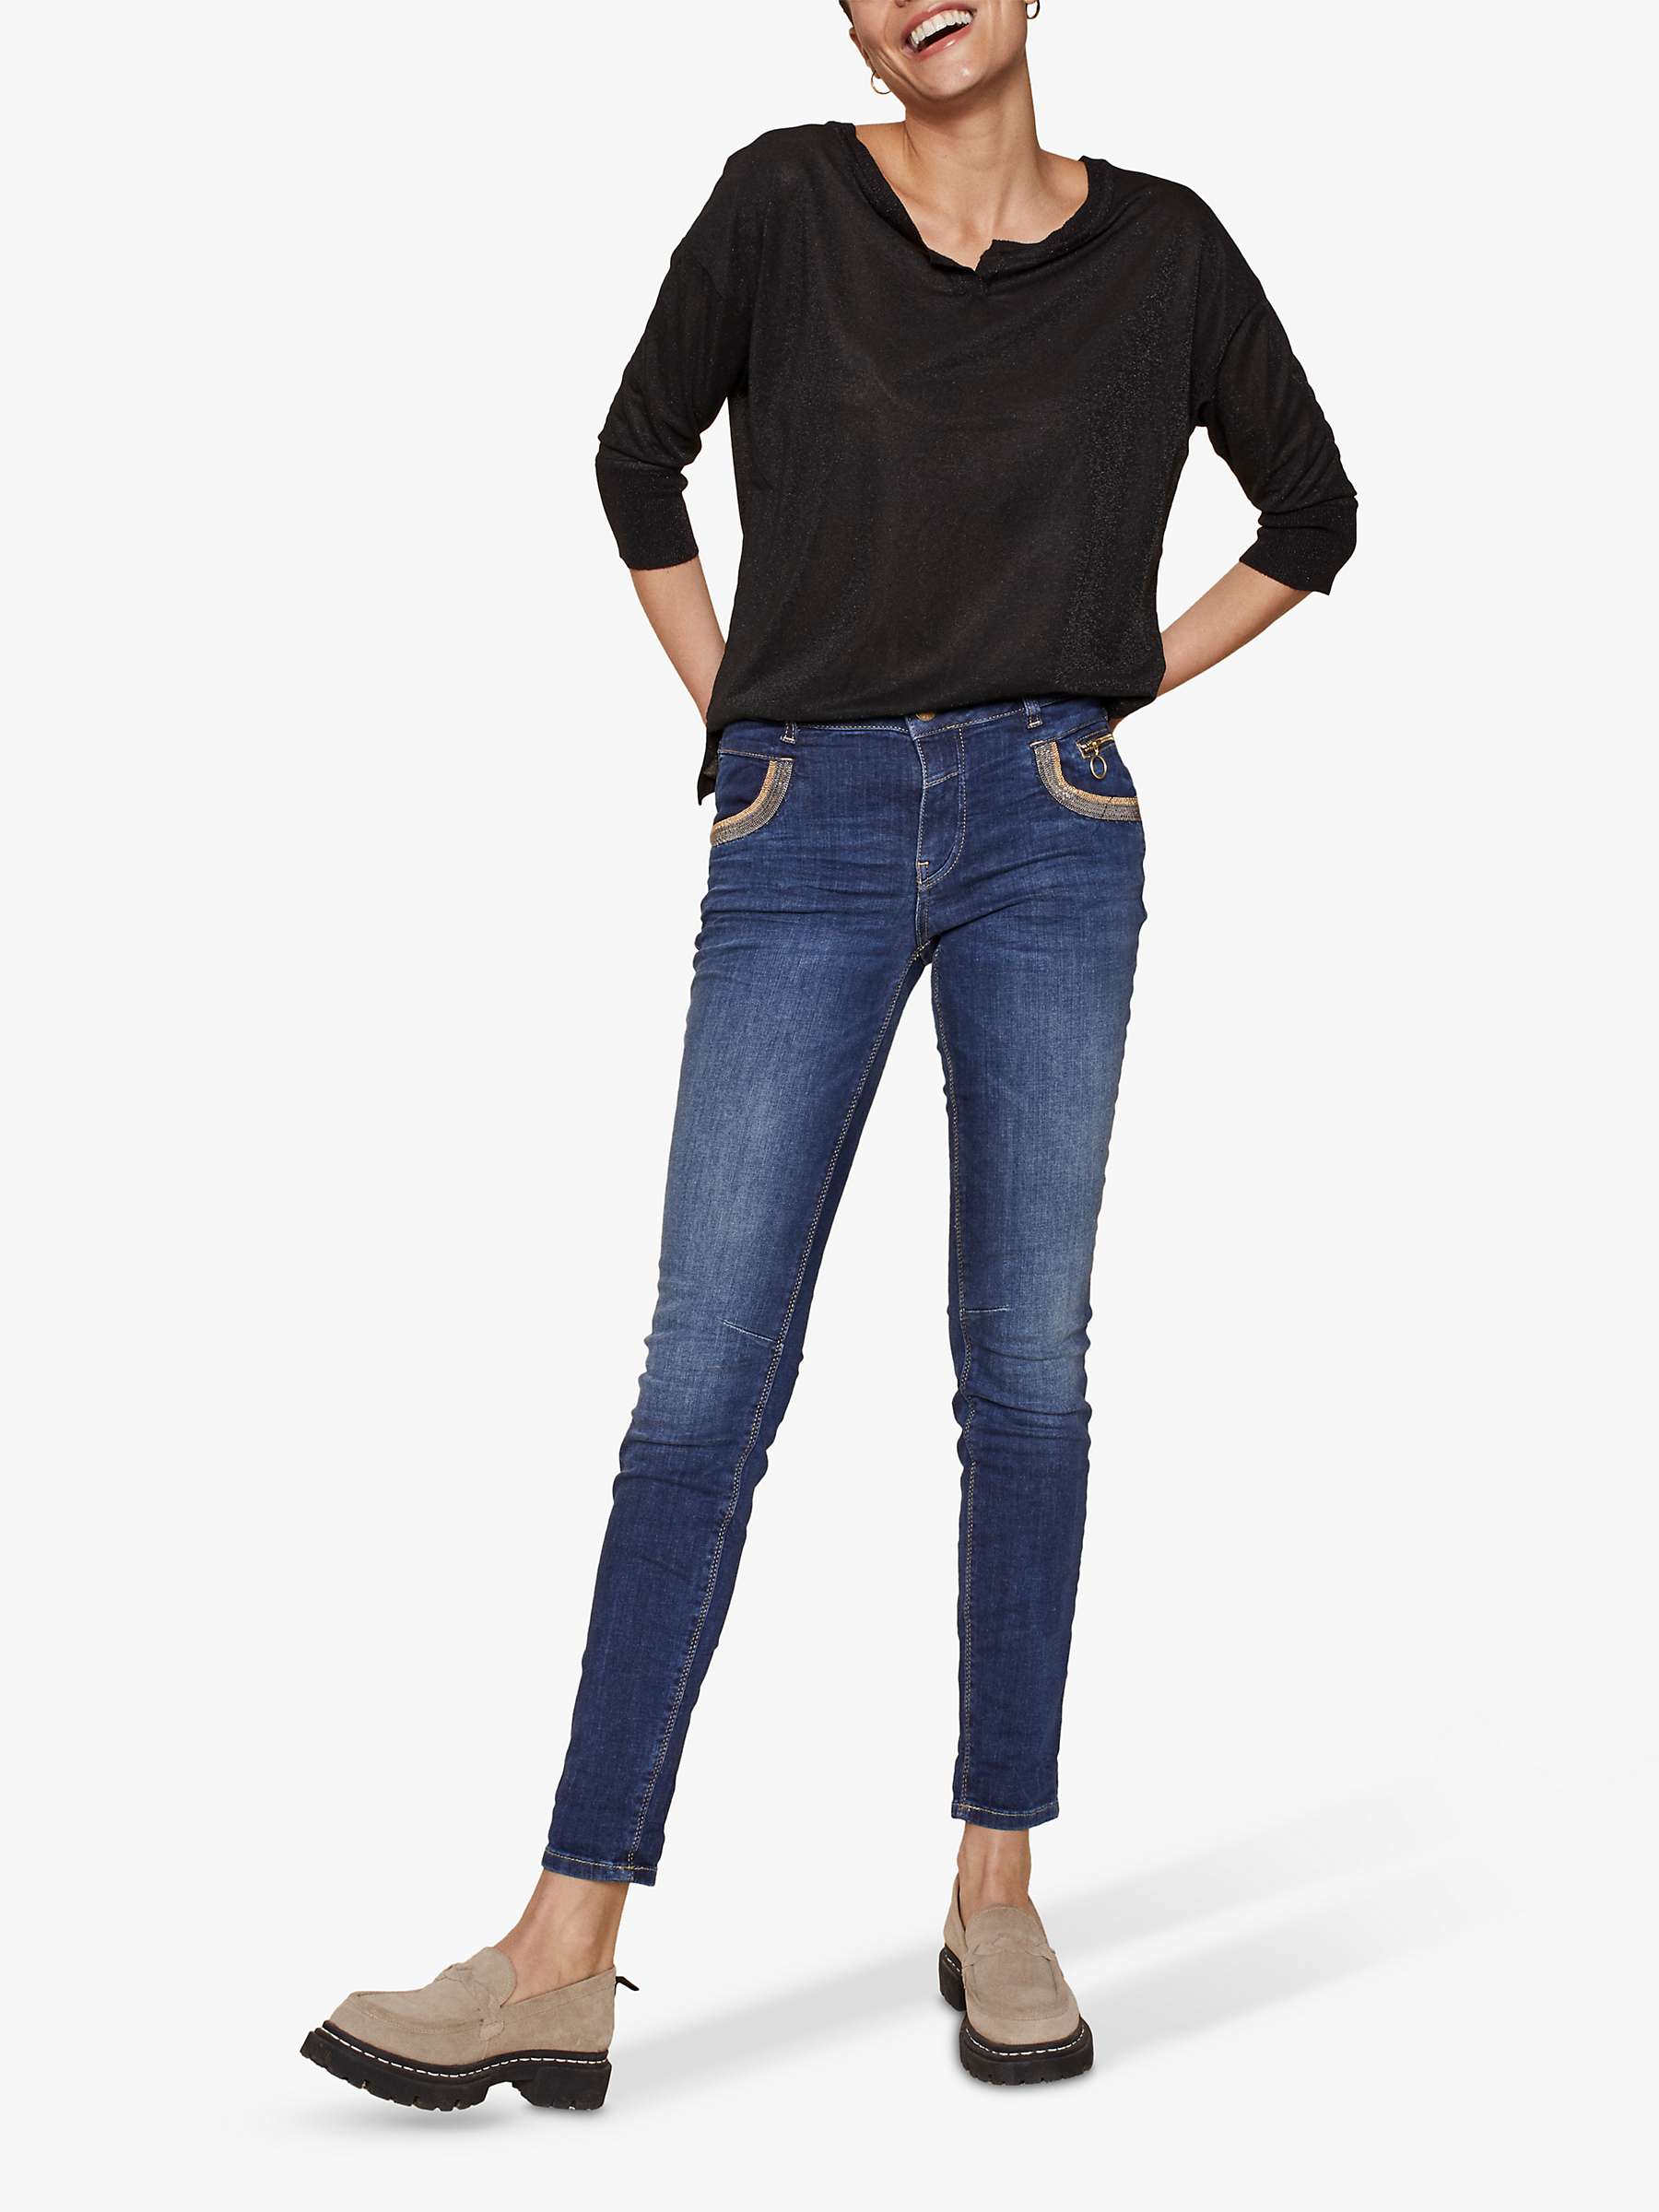 Buy MOS MOSH Naomi Decorative Trim Slim Fit Jeans, Blue Online at johnlewis.com